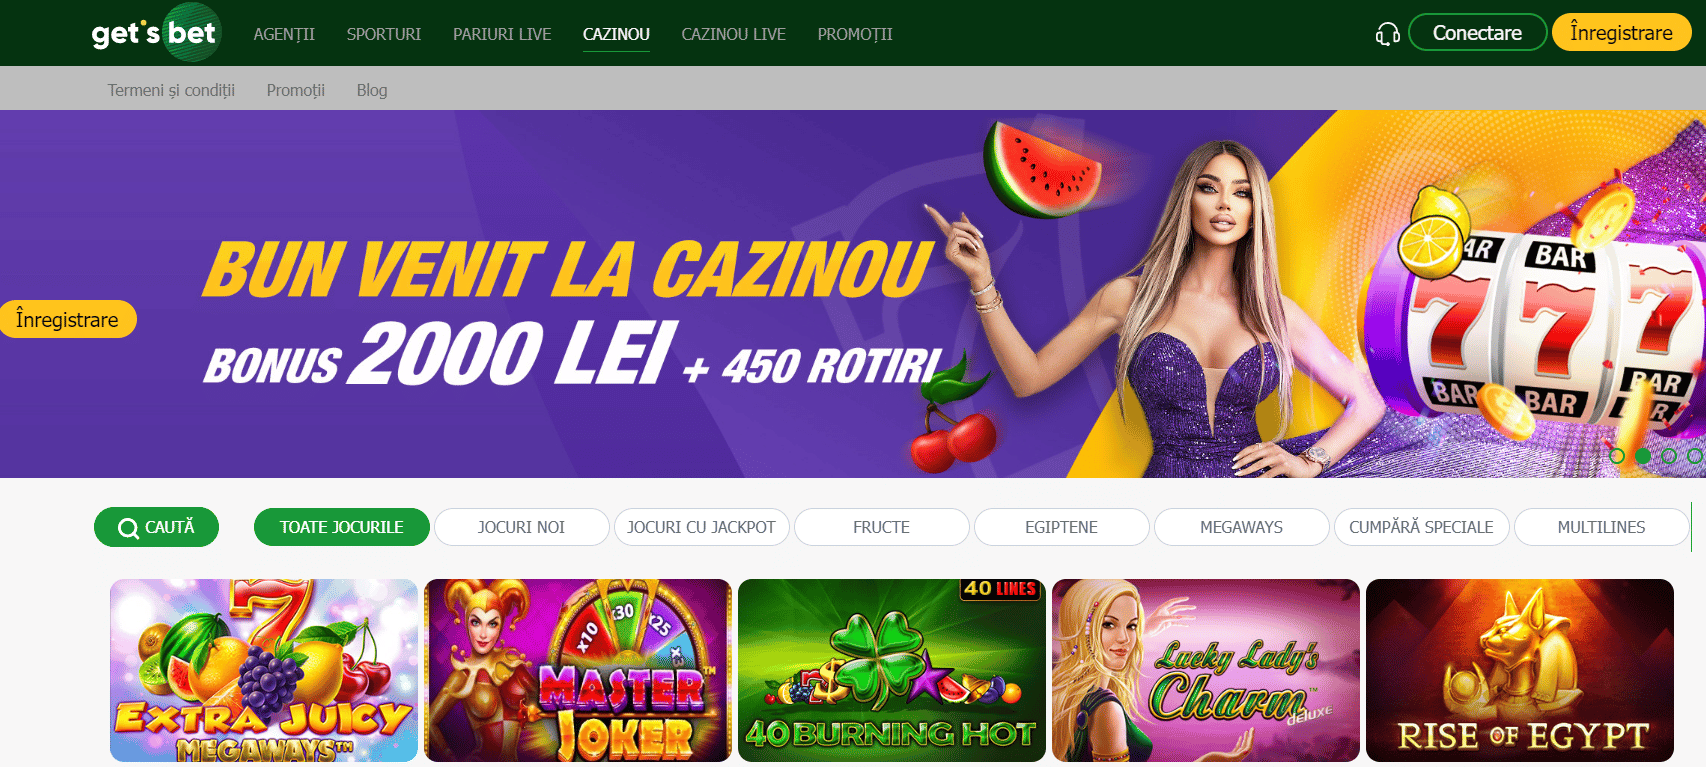 gets bet casino homepage